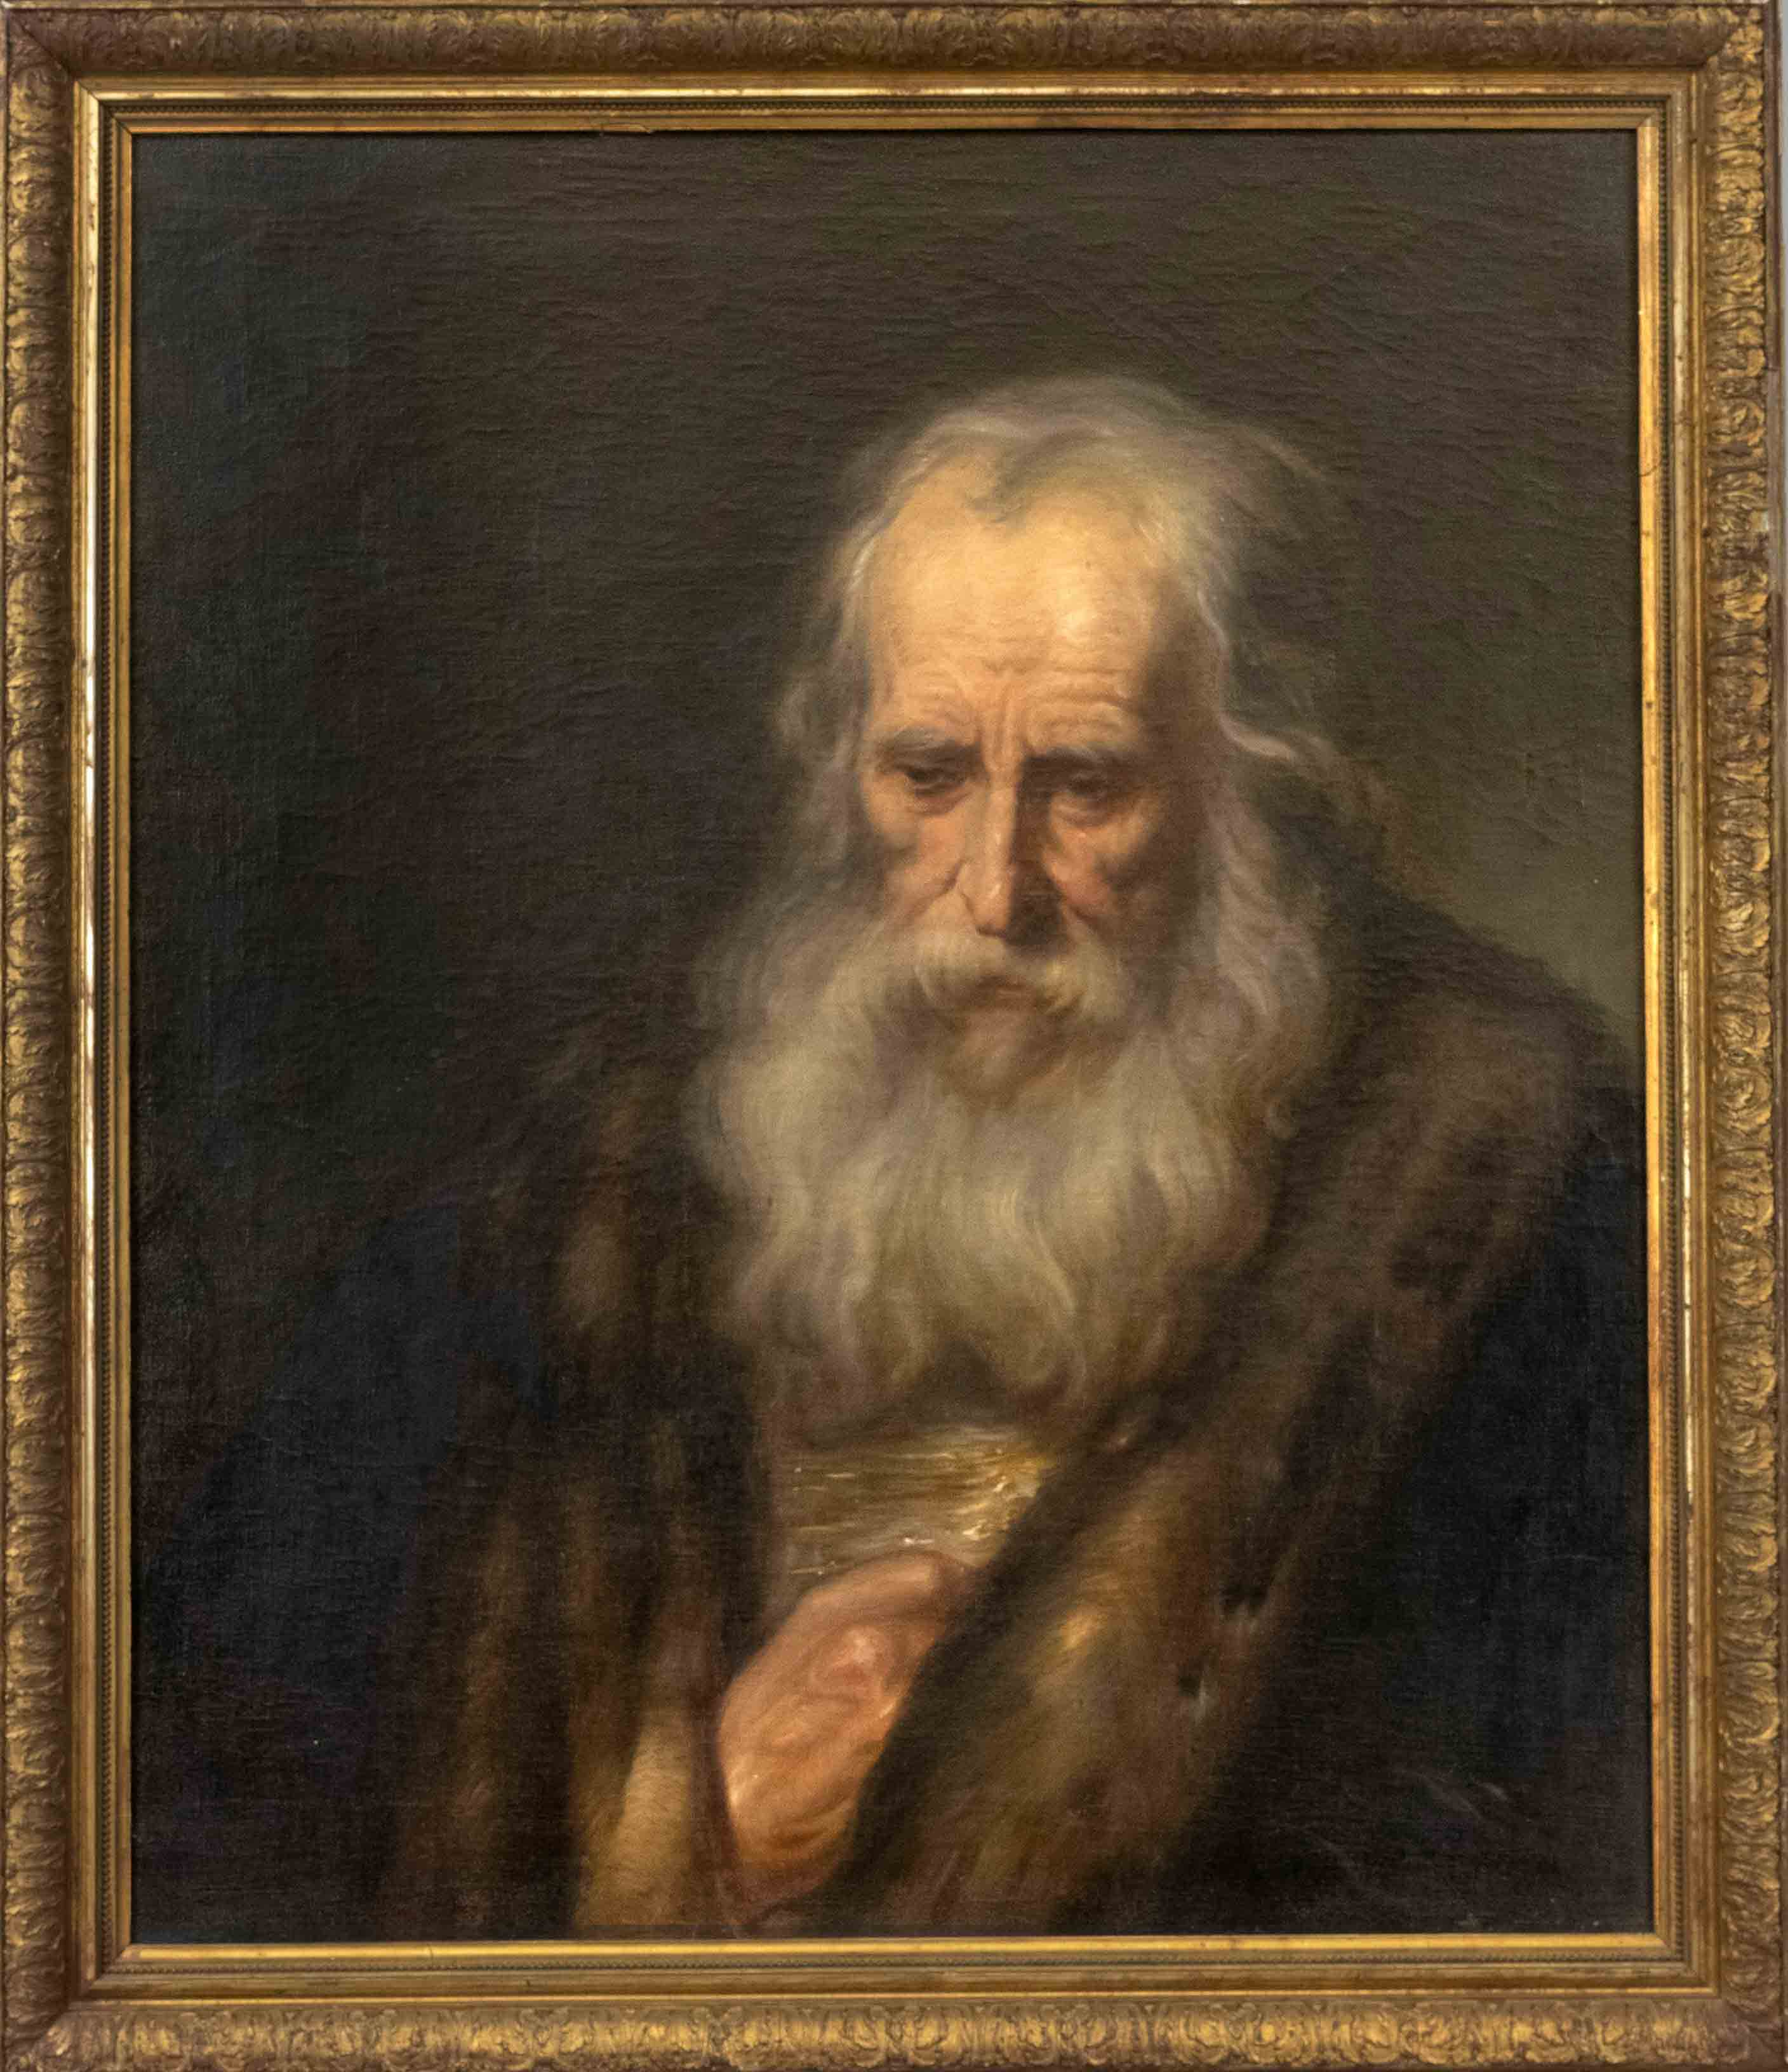 Ferdinand Thurnherr (1875-1930/50), Munich painter and copyist. Head of a bearded man, copy after an